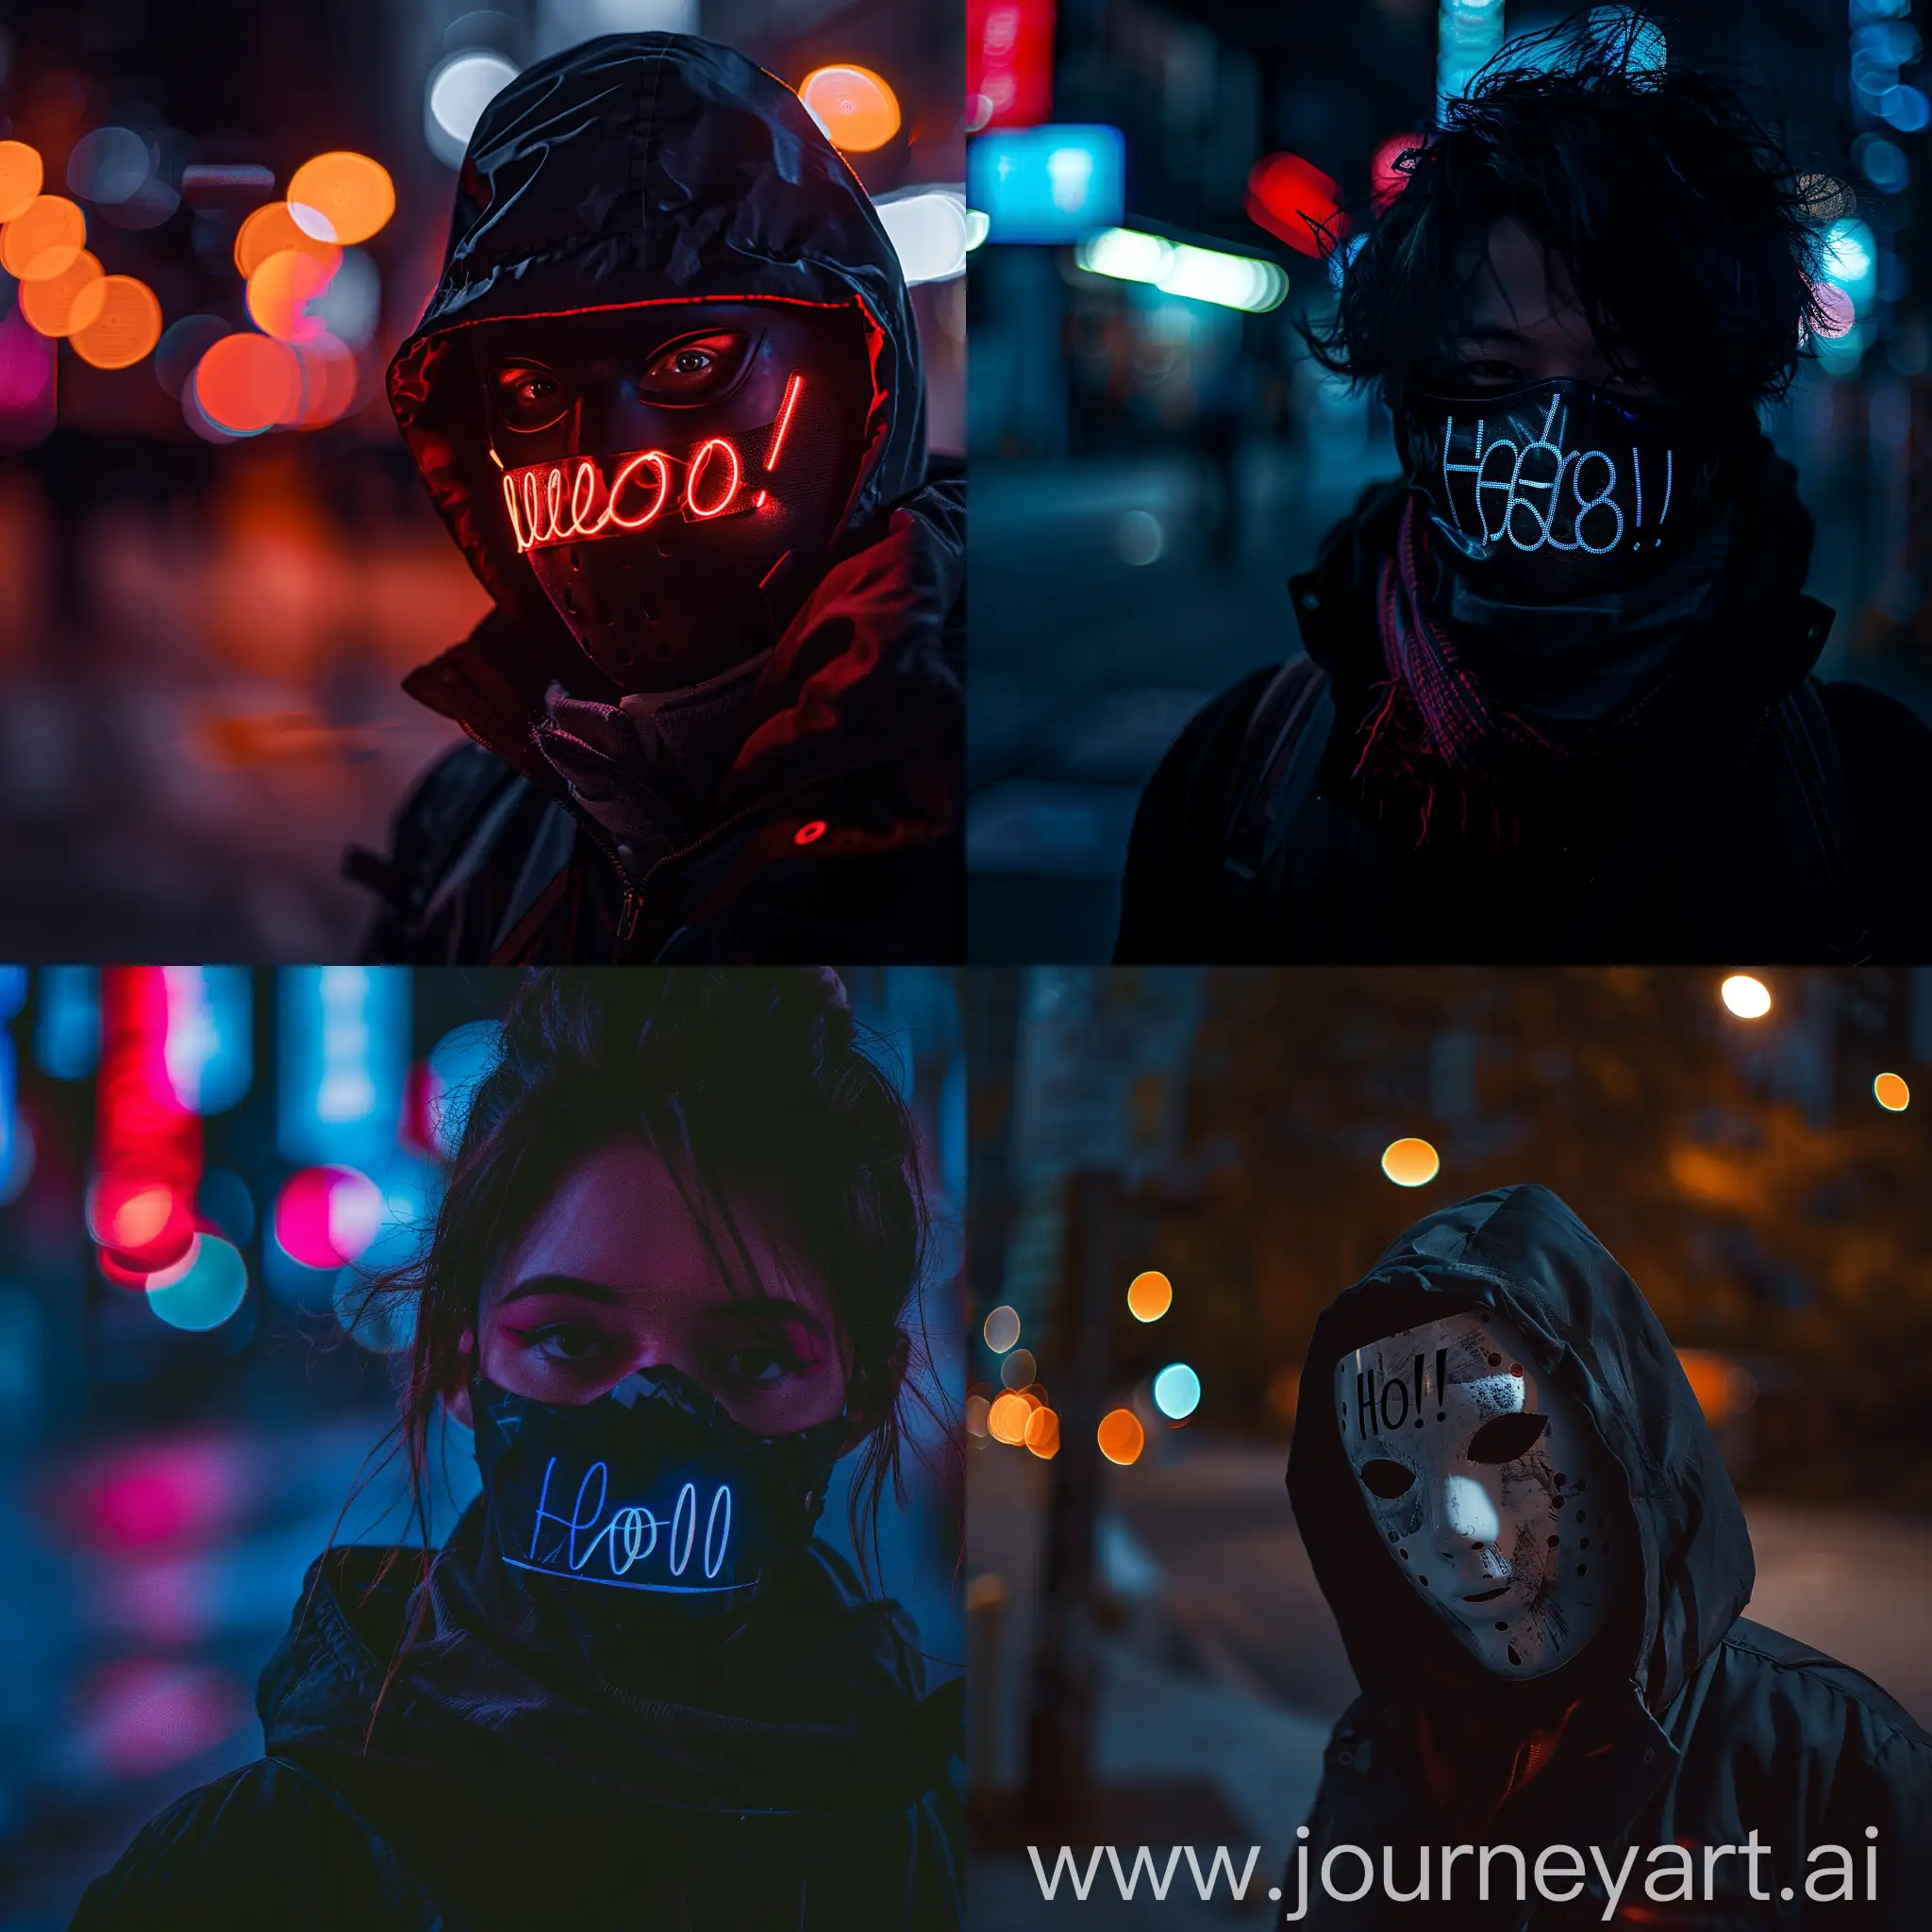 человек в кибер маске,ночная улица,на маске кибер надпись,слово привет,реалистично